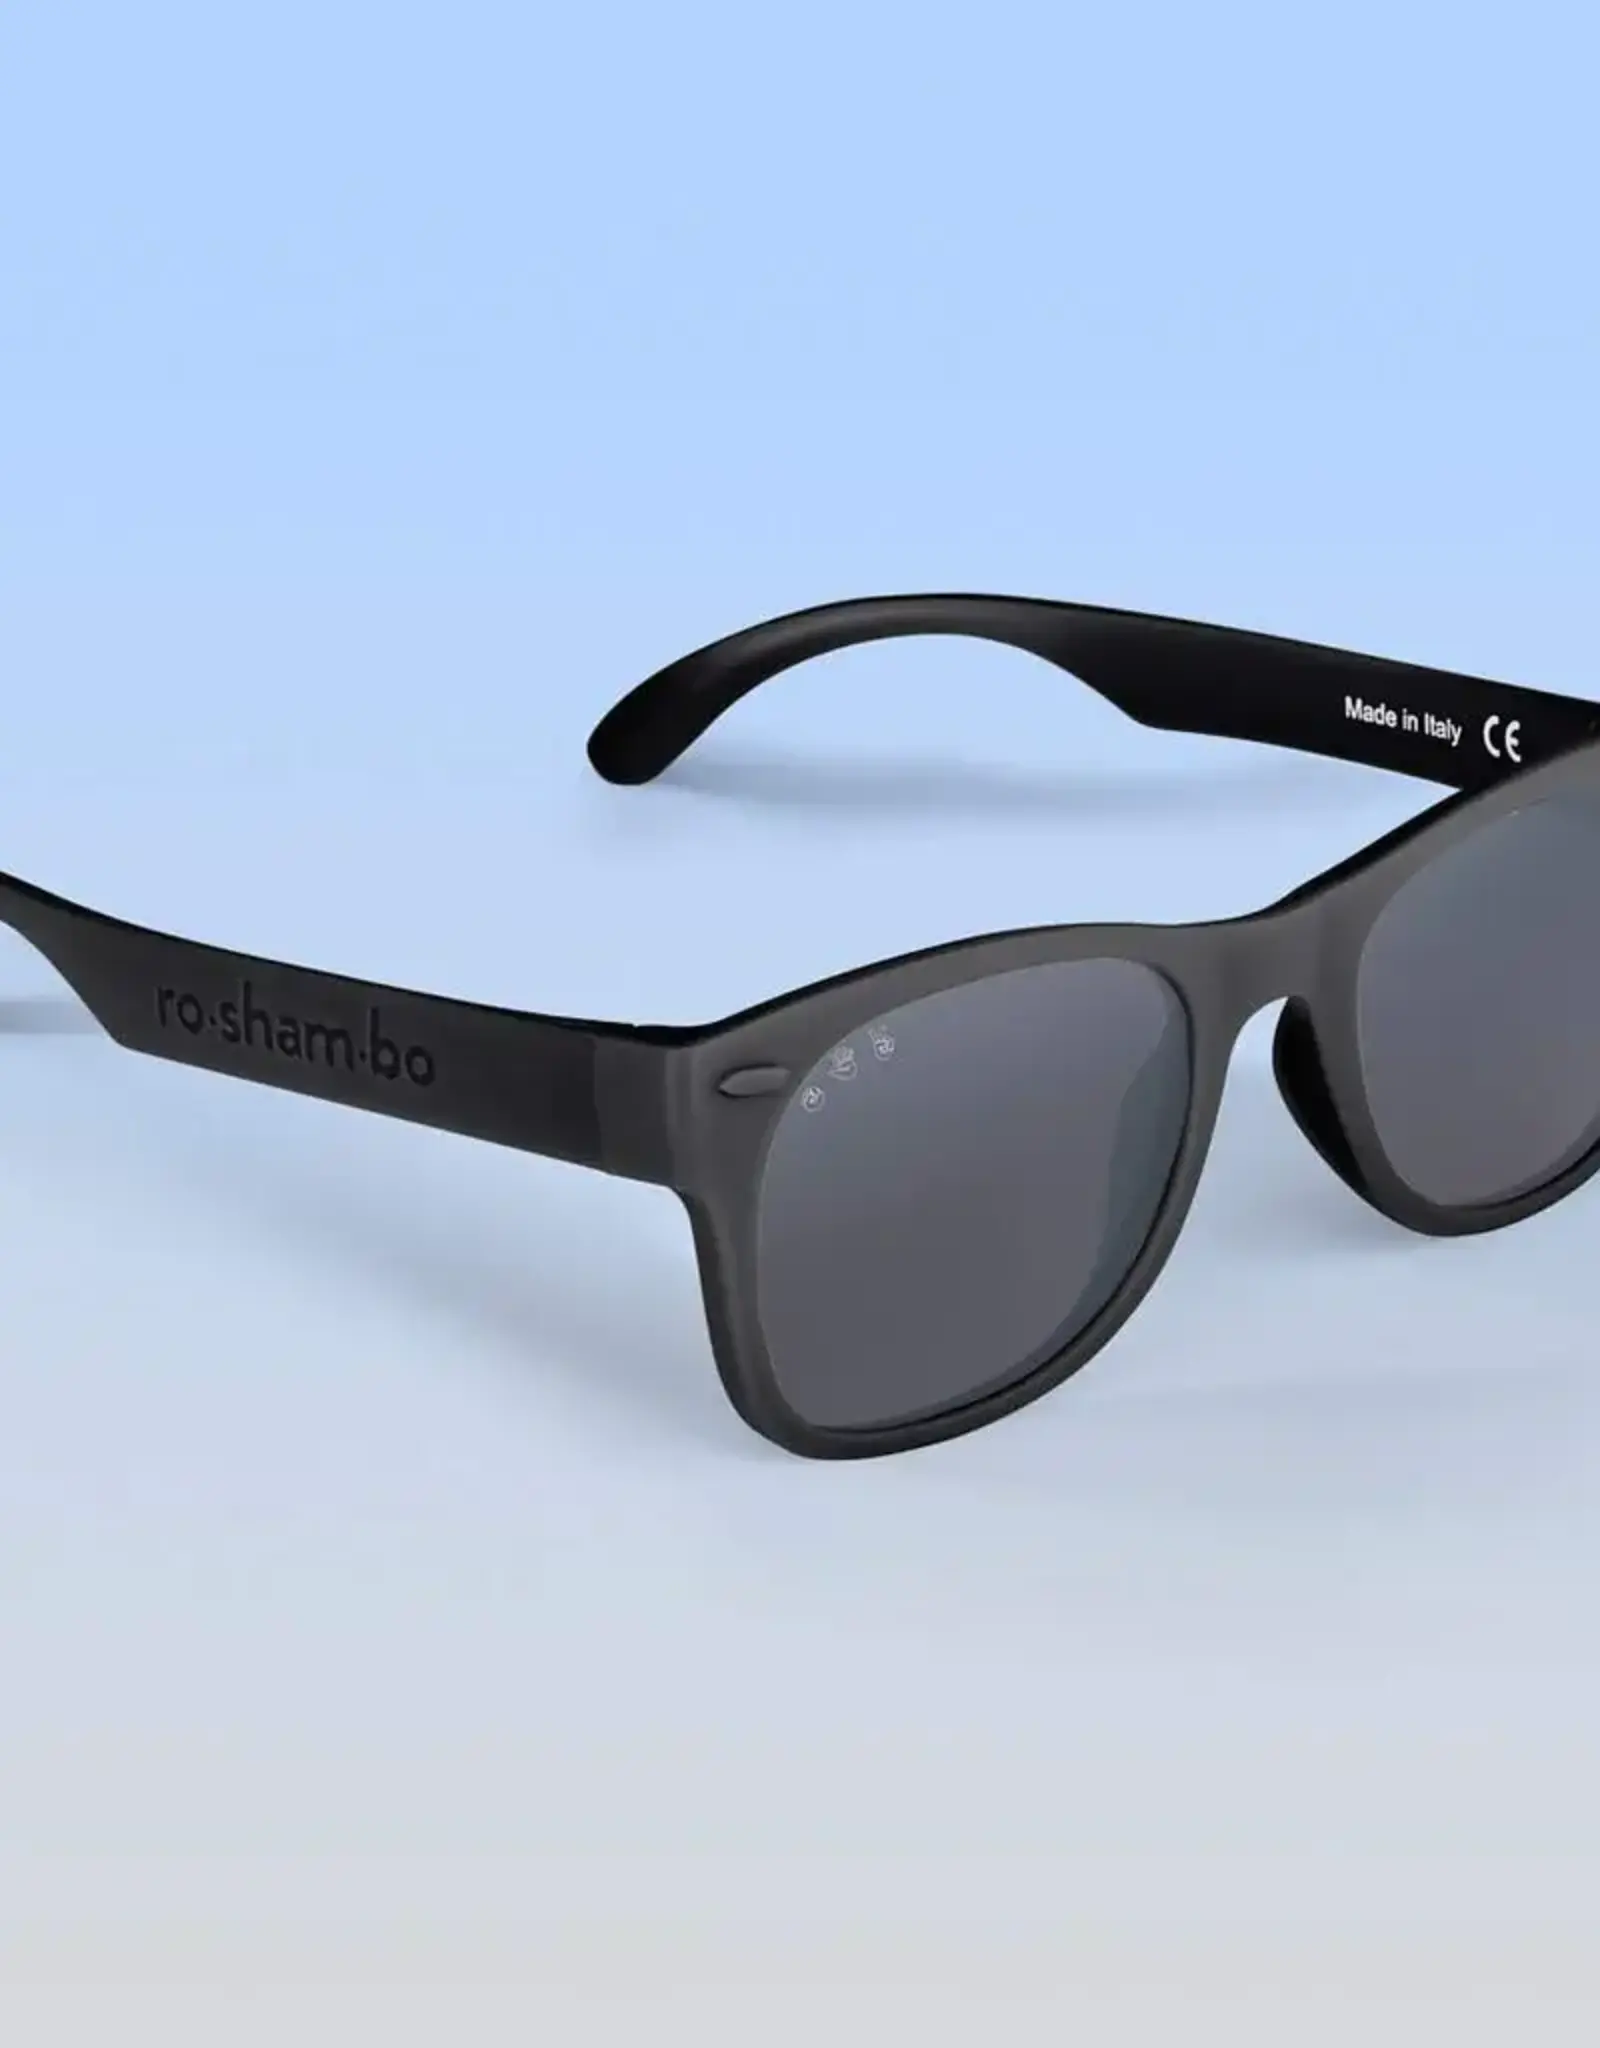 Roshambo Baby Black Sunglasses Grey Polarized Lens / Junior (Ages 5+)